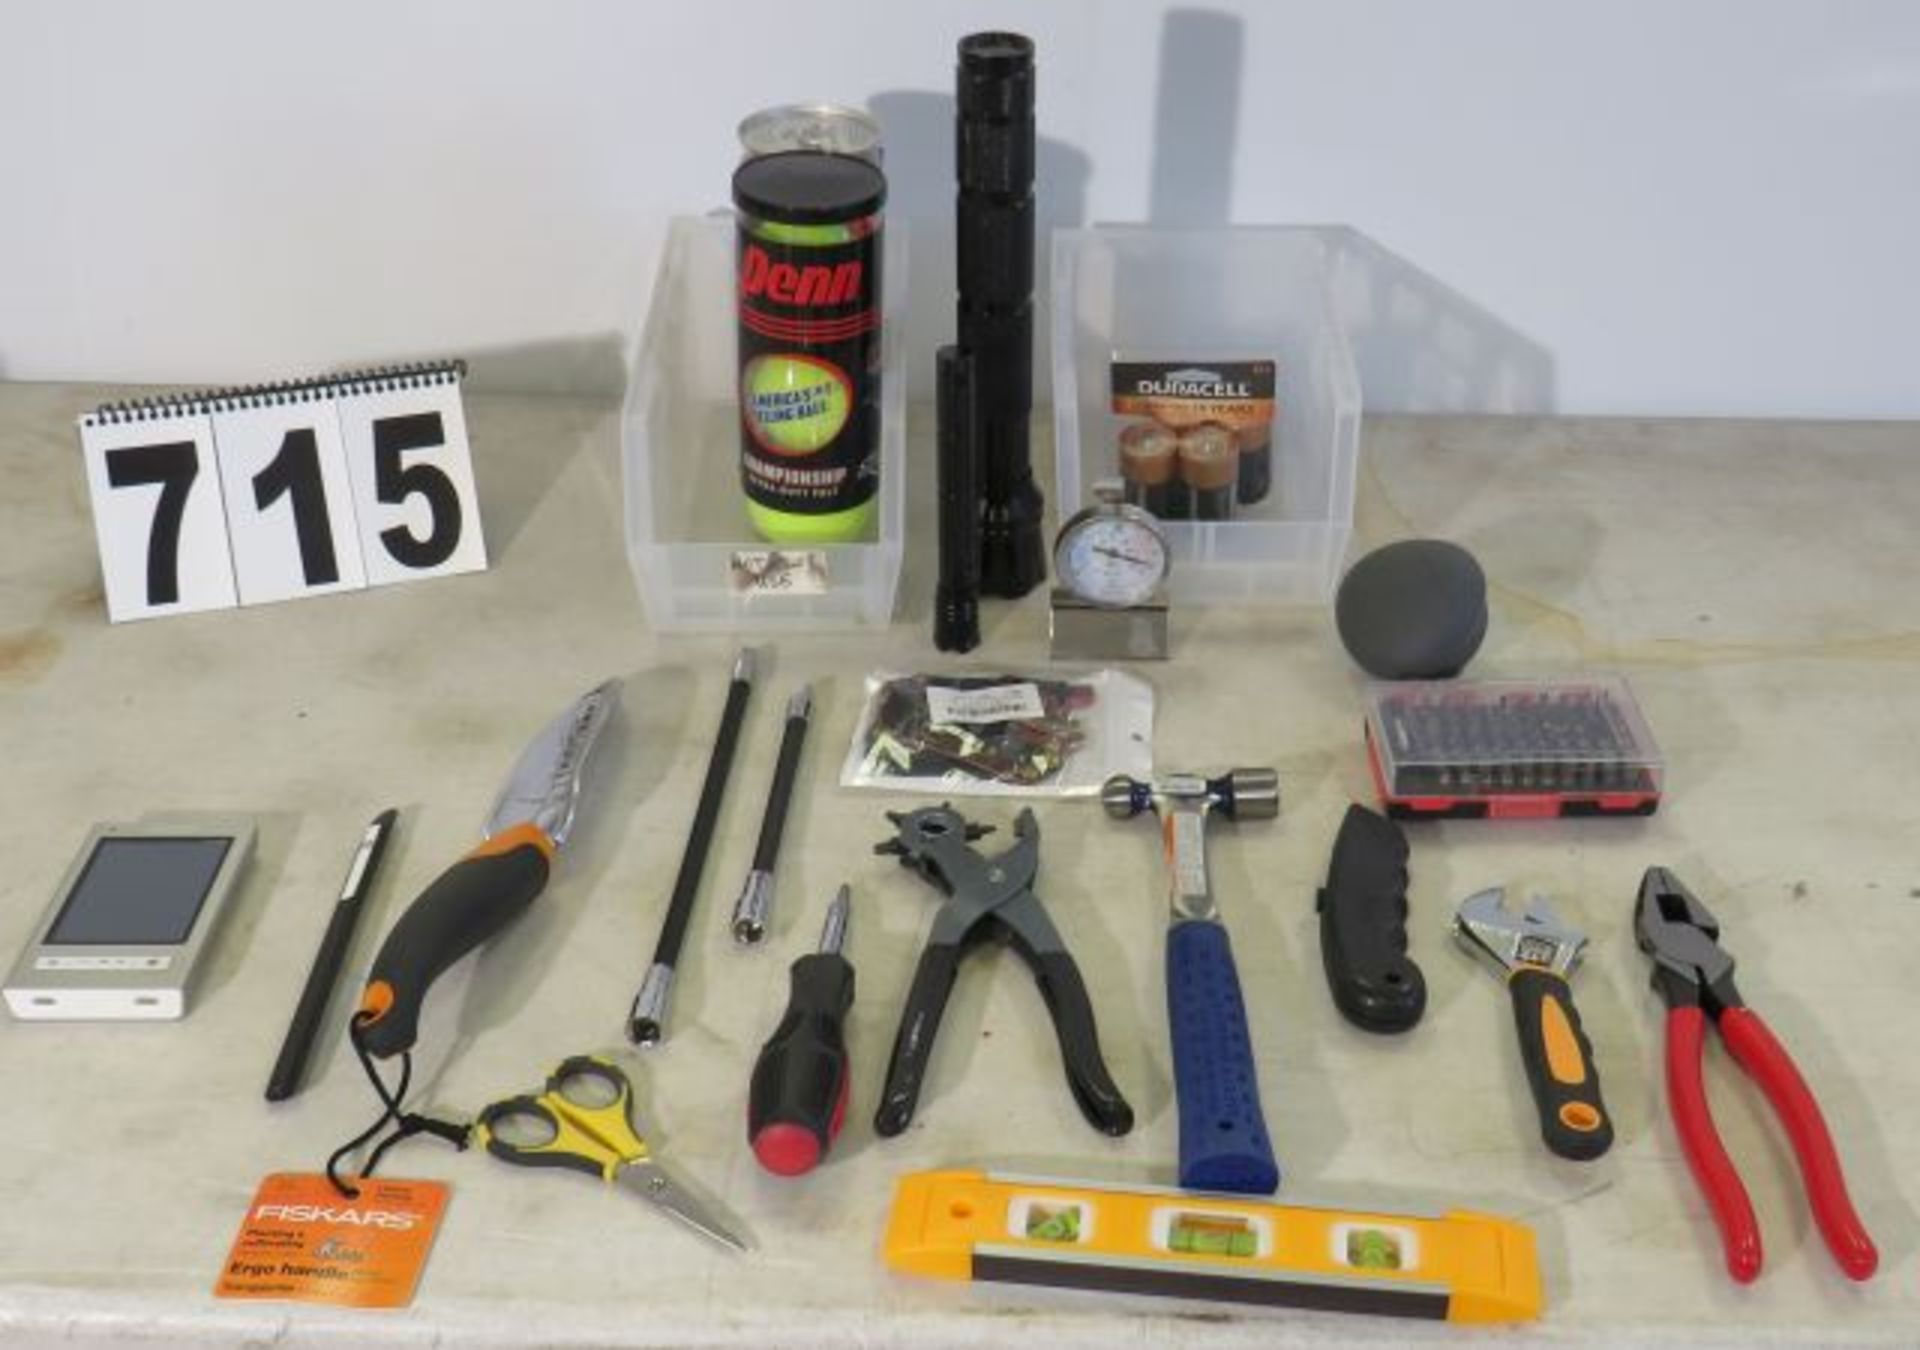 mixed tools, flashlights, tennis balls, oven temp gauge